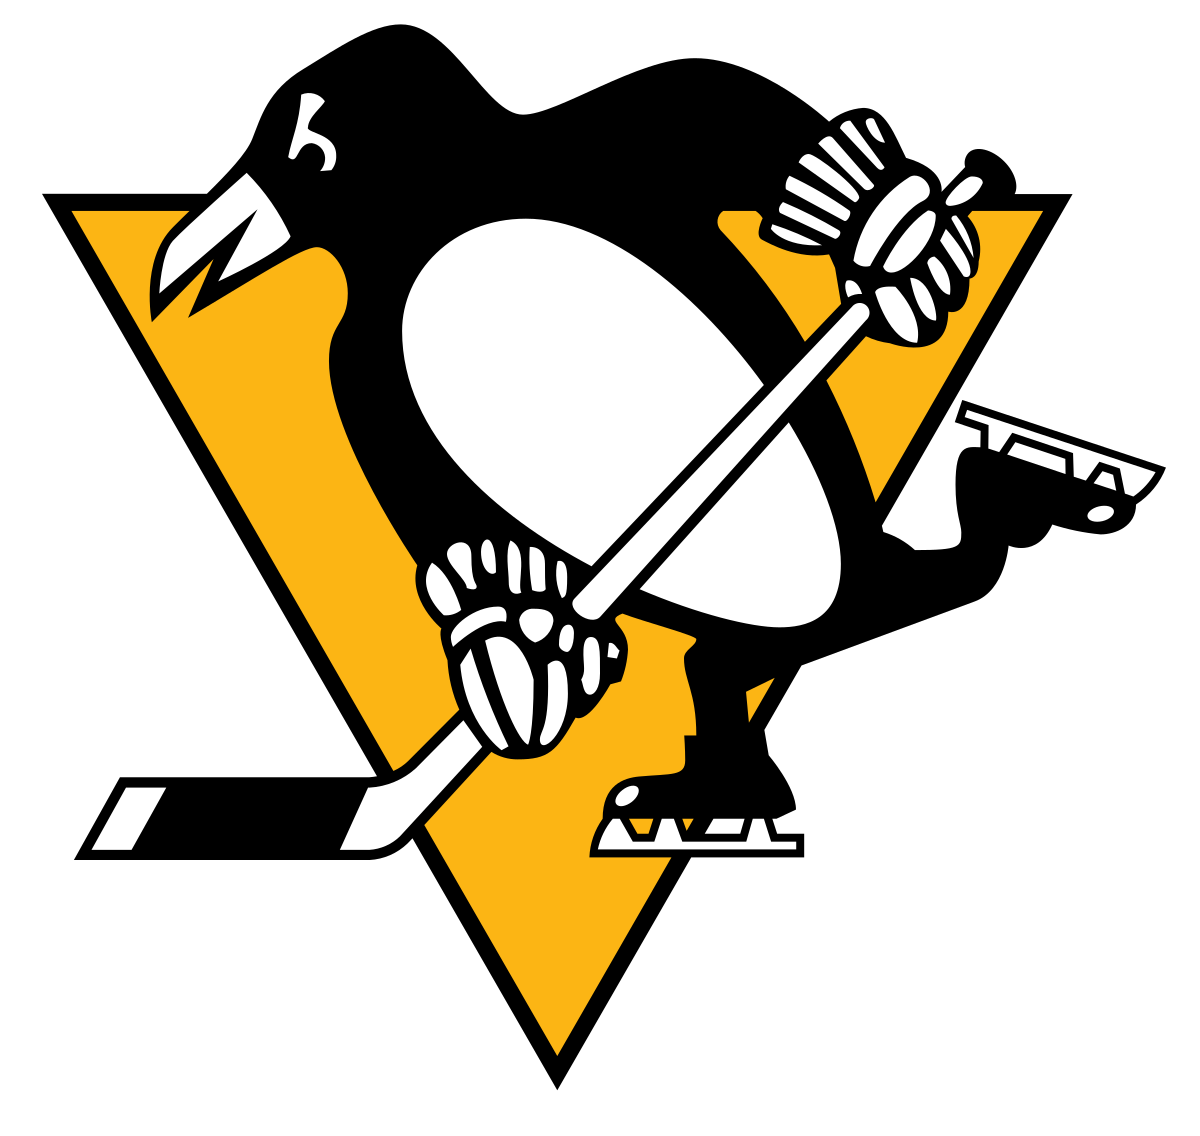 Pittsburgh Penguins Wikipedia Rh En Wikipedia Org Fish - Pittsburgh Penguins Logo 2017 (1200x1136)